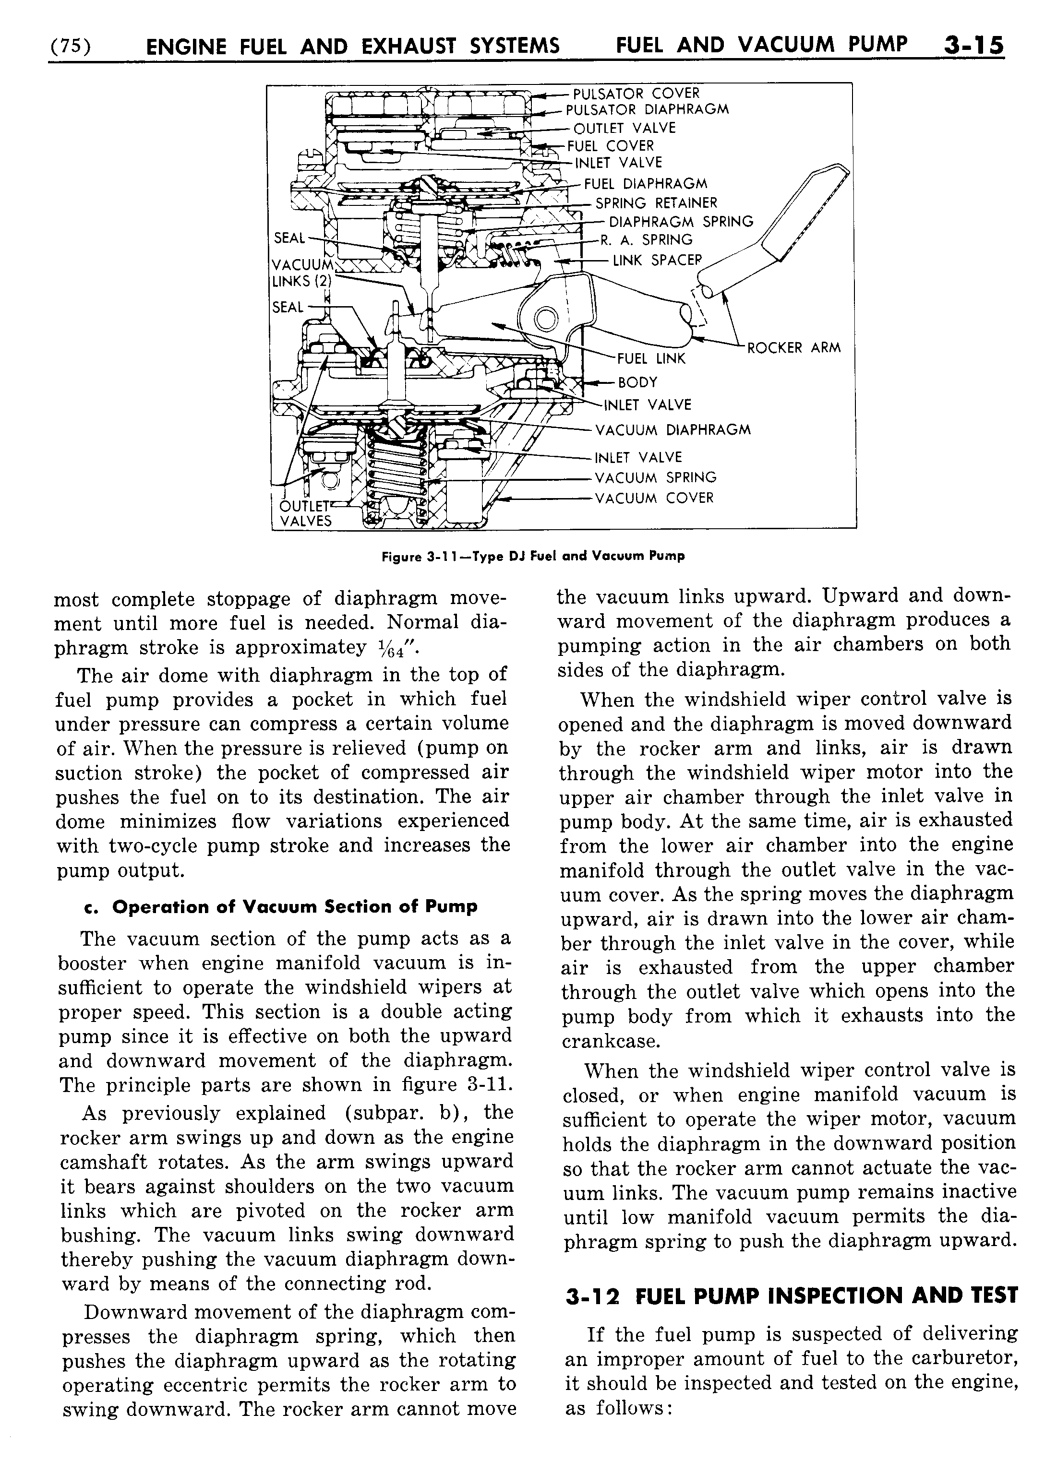 n_04 1954 Buick Shop Manual - Engine Fuel & Exhaust-015-015.jpg